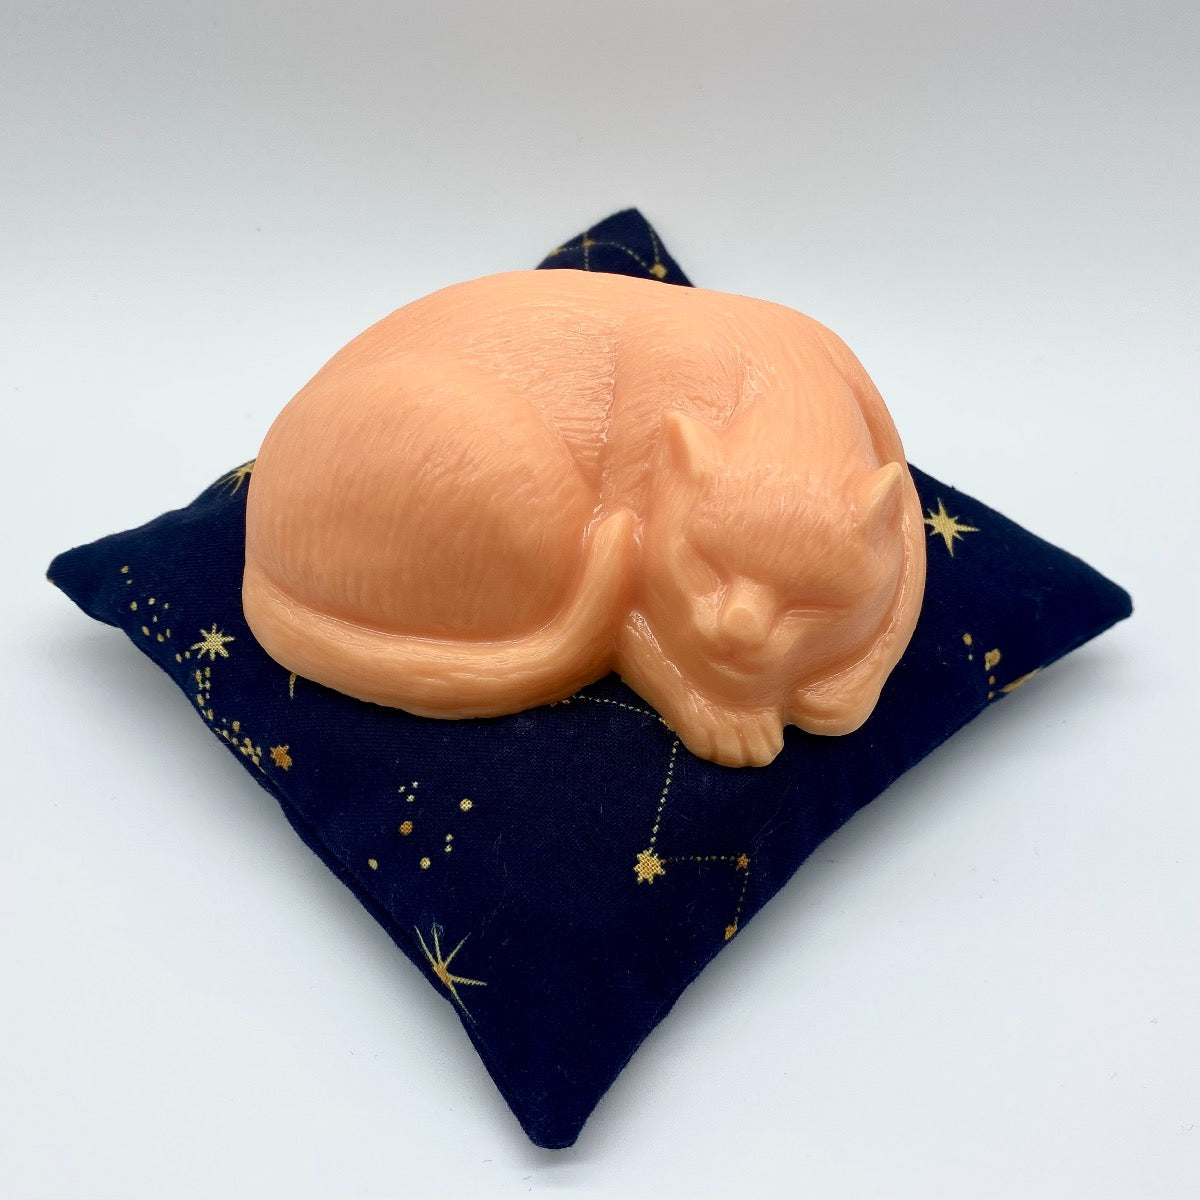 Orange cat-shaped  soap on navy blue celestial  print pillow